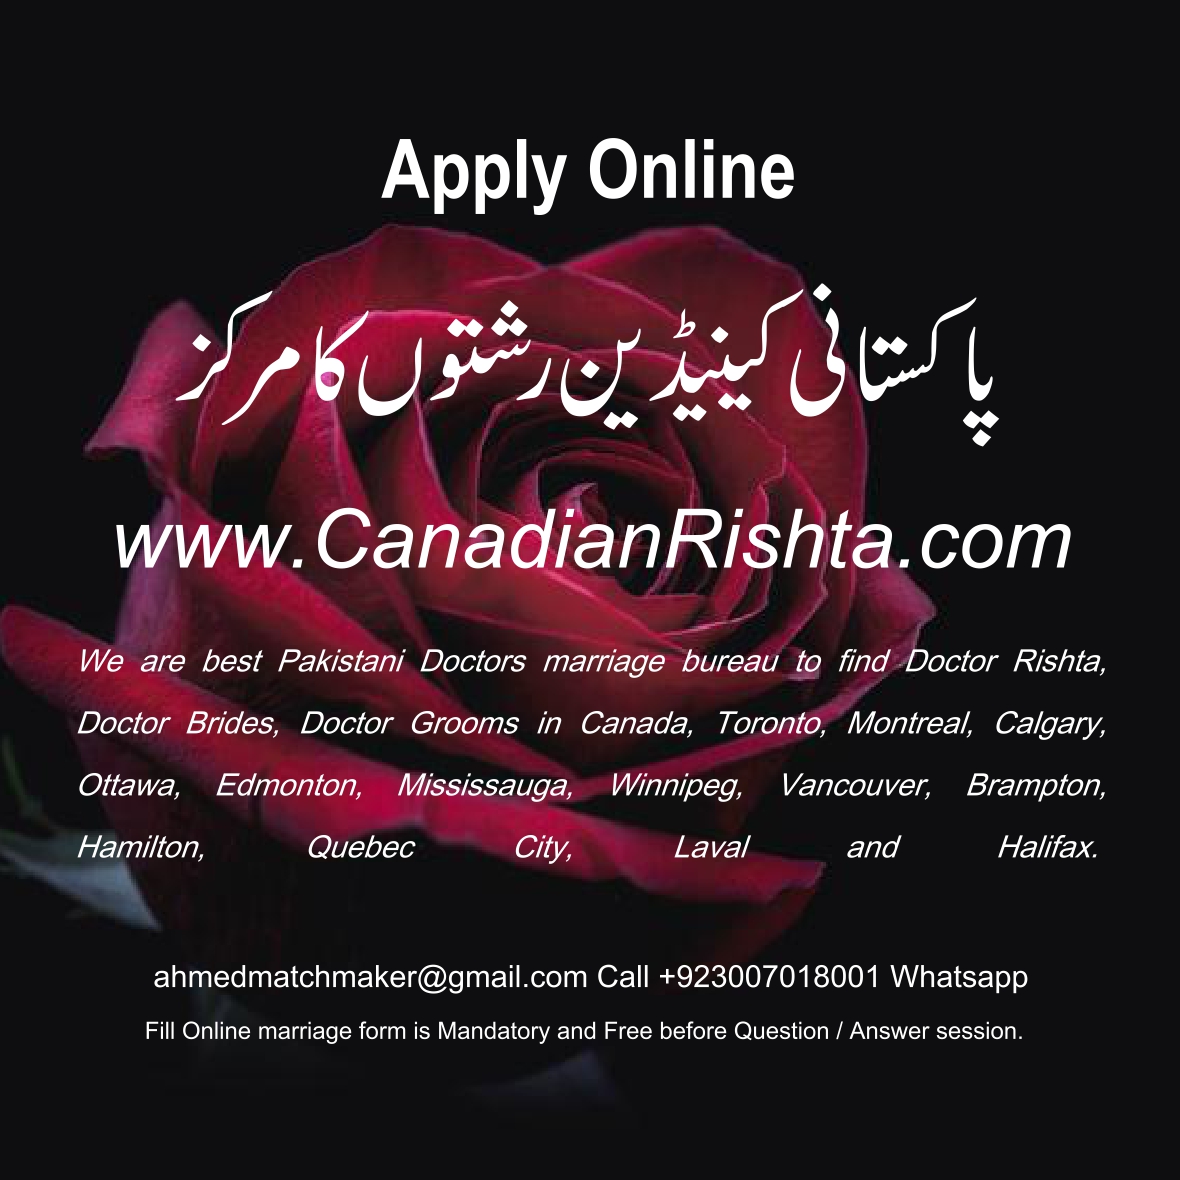 Pakistani-rishta-shaadi-marriage-bureau-Canada-Toronto-Montreal-Calgary-Ottawa-Vancouver-Brampton-Hamilton-Quebec-1.jpg